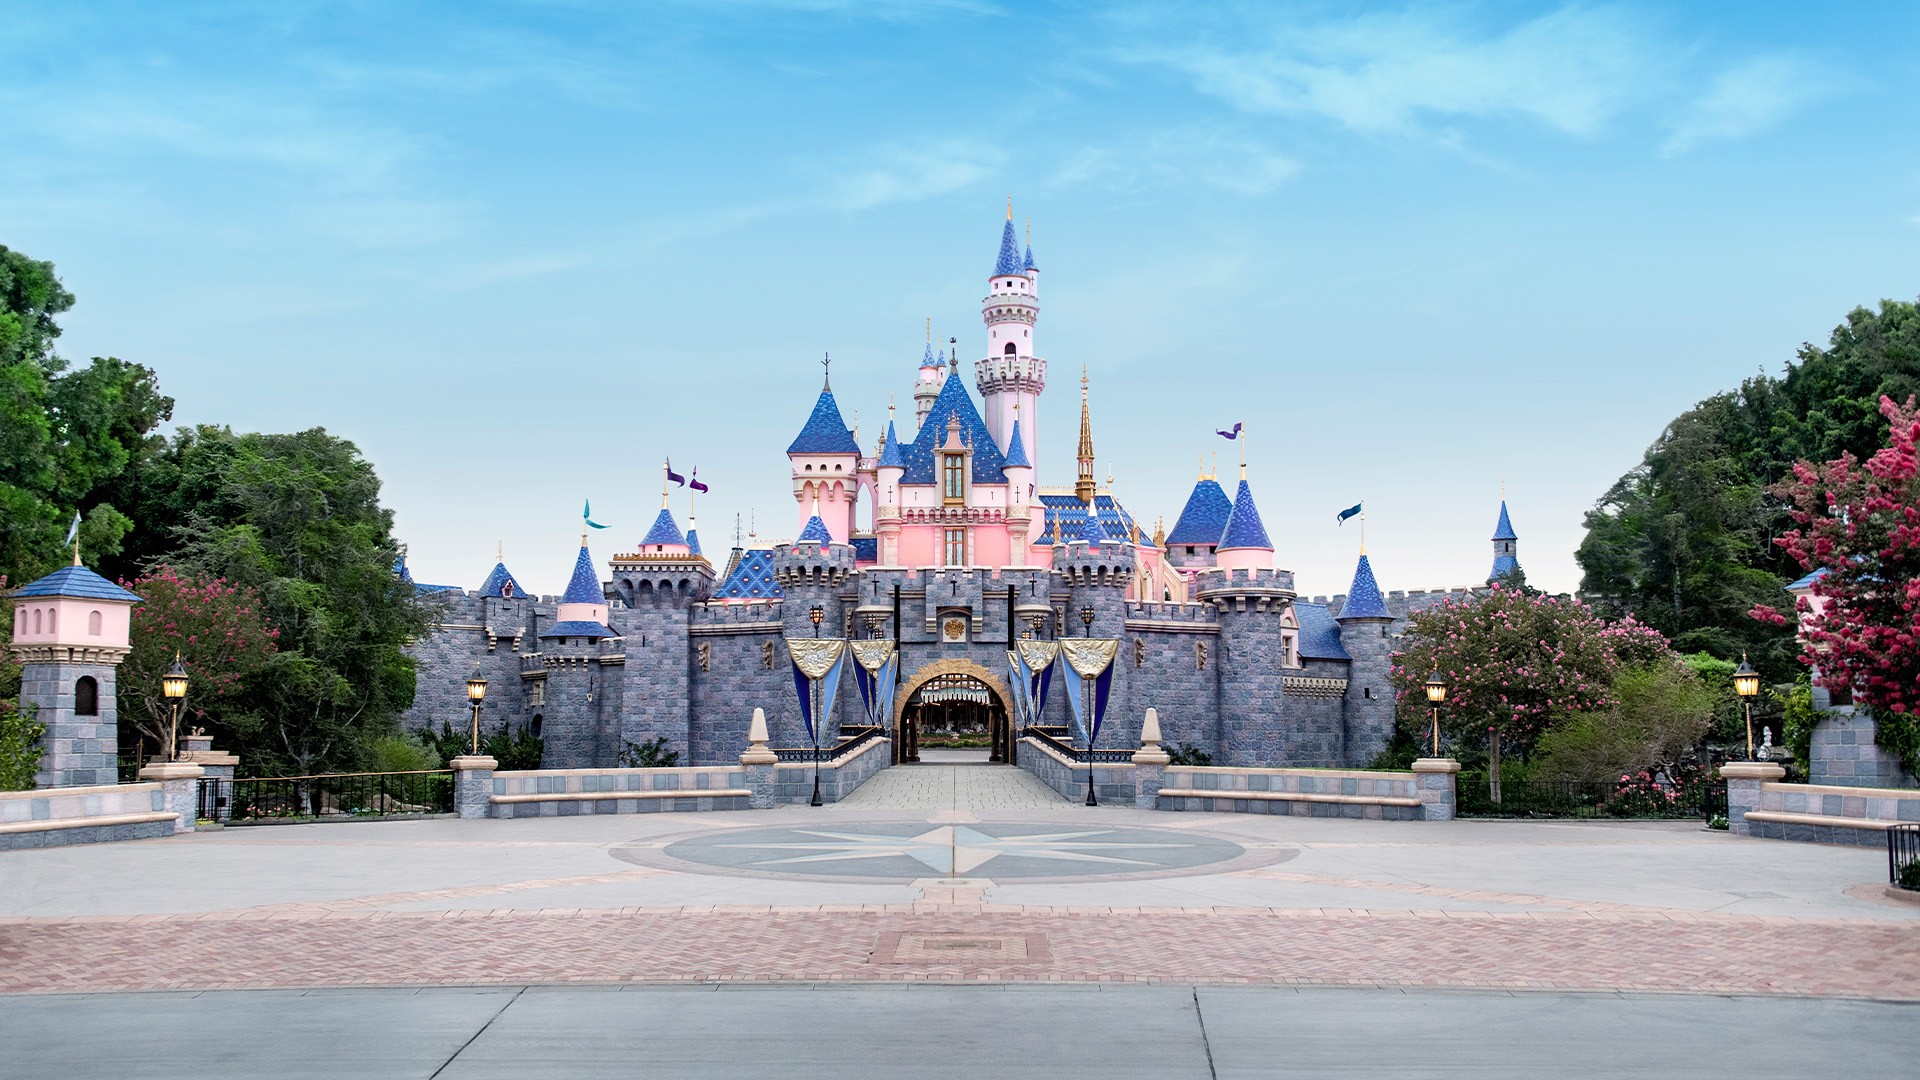 Image courtesy of Disneyland Resort